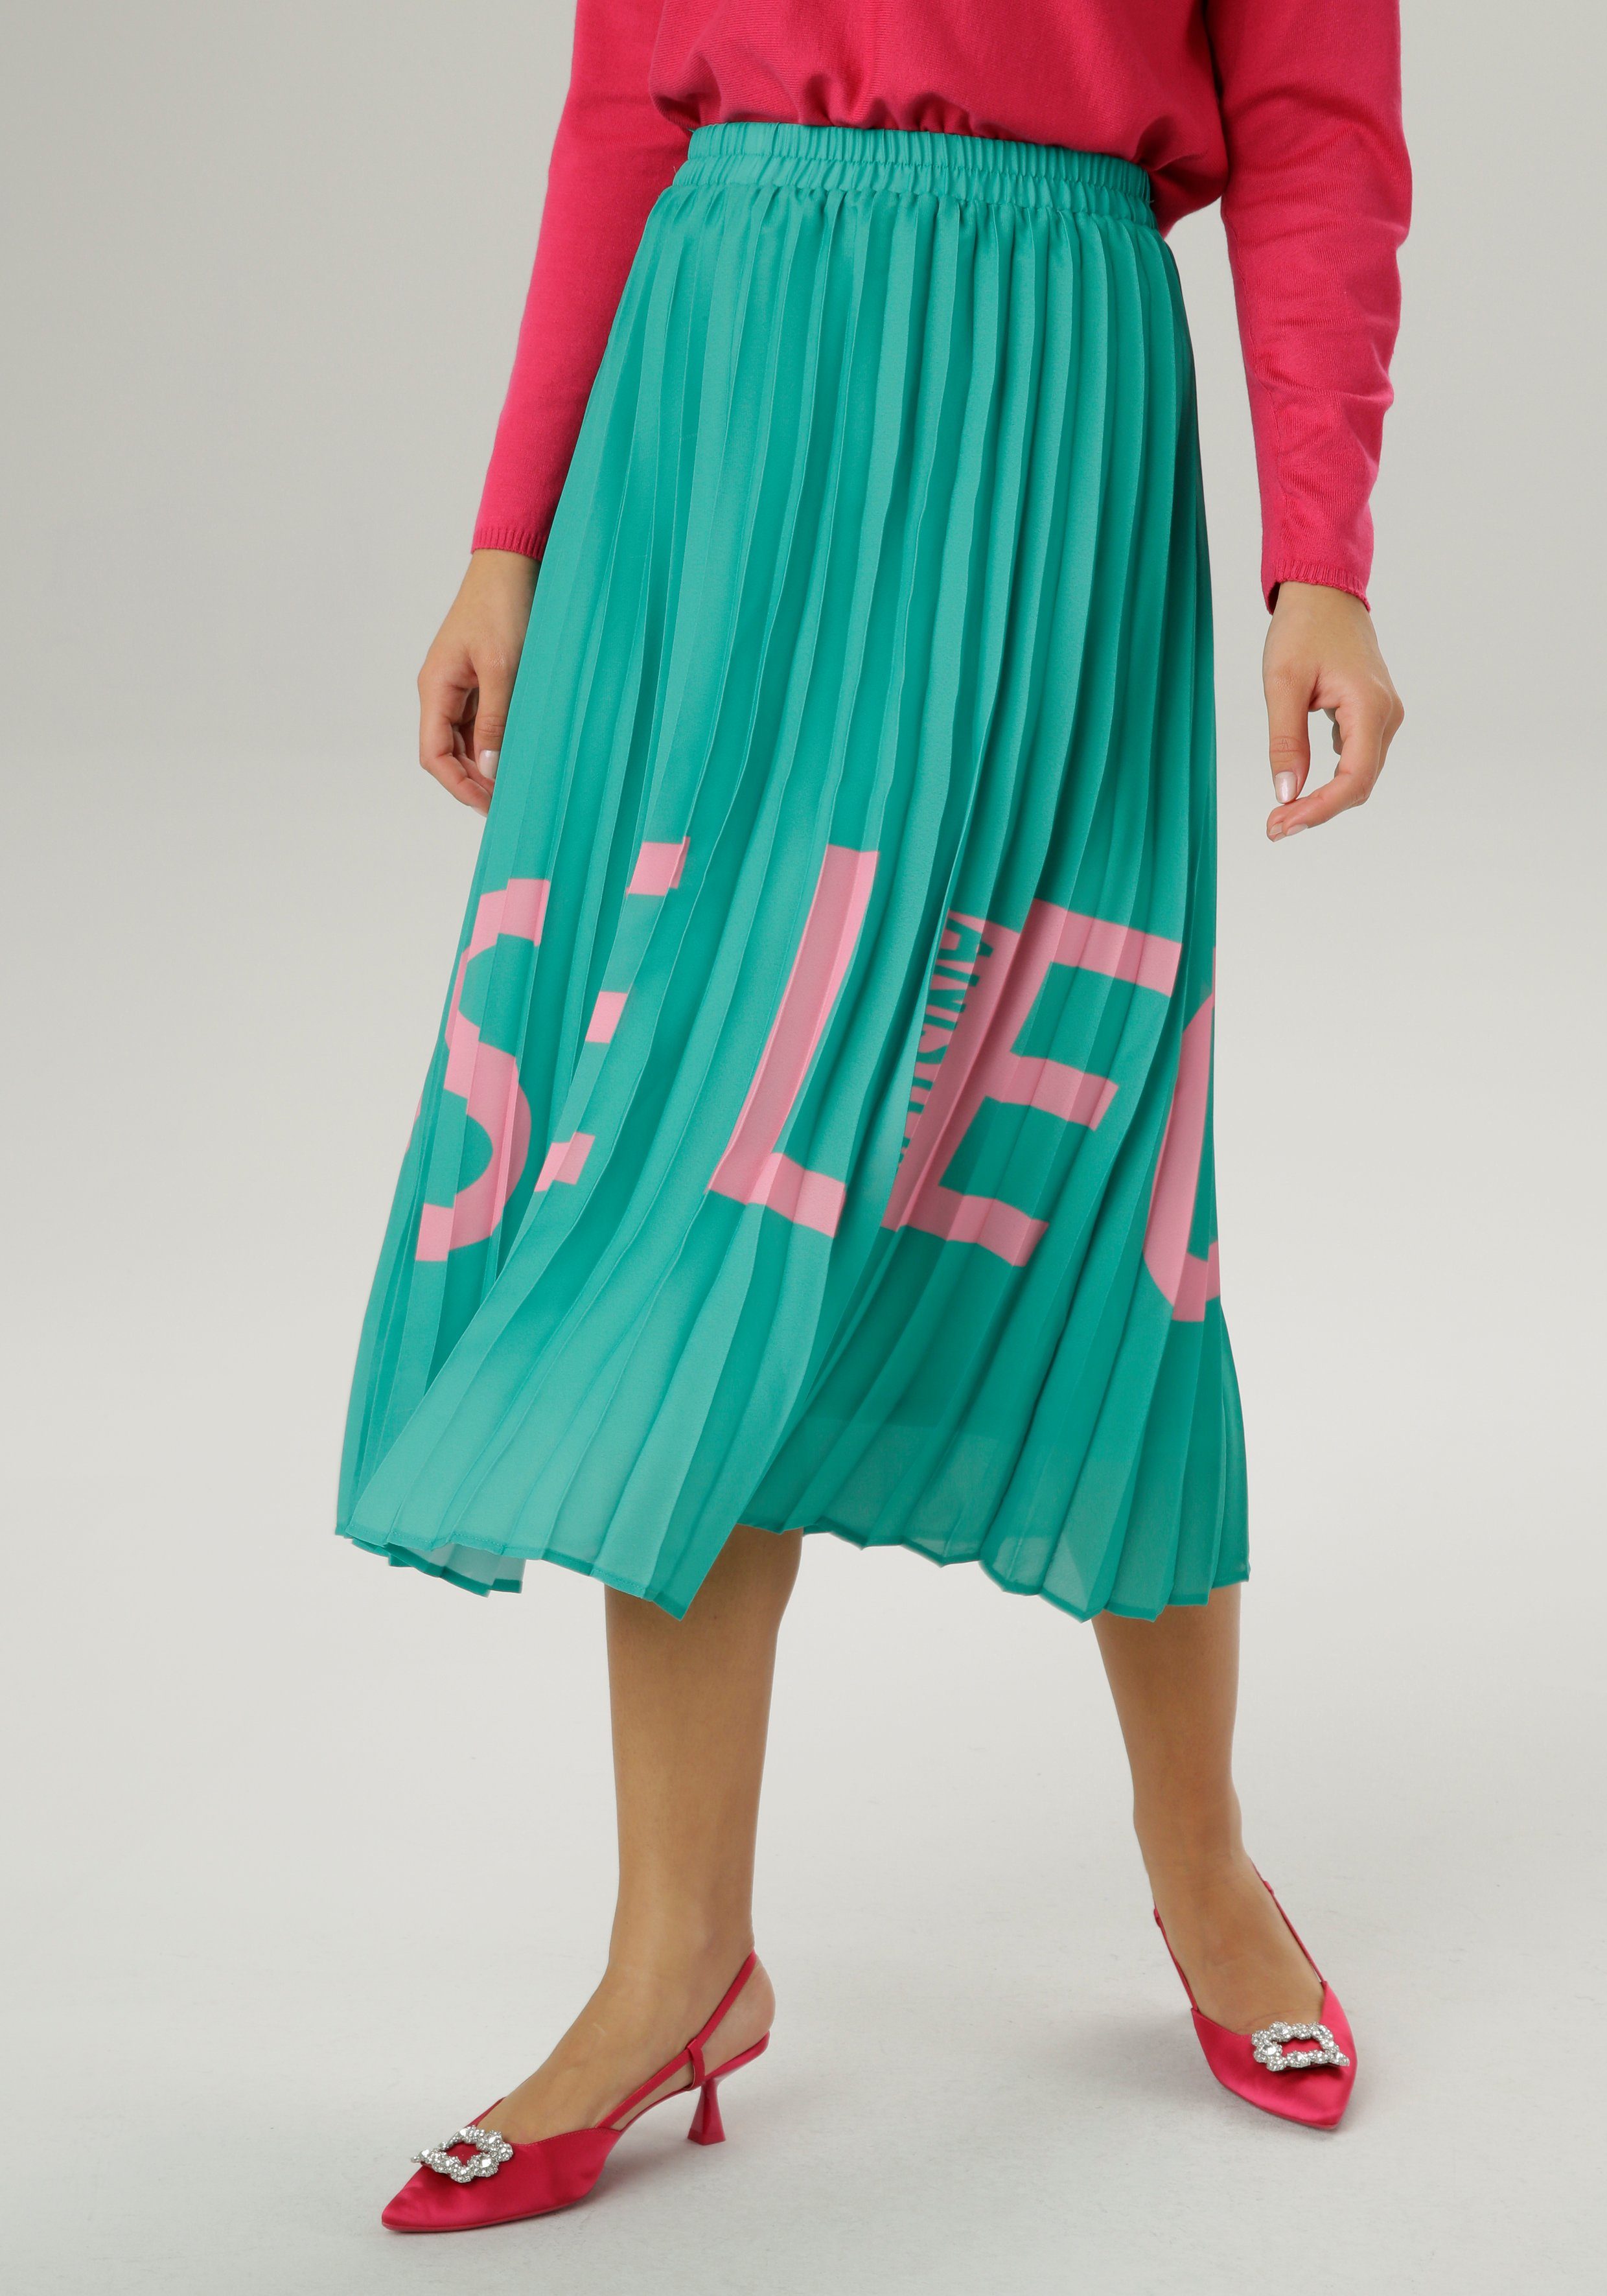 Aniston SELECTED Plisseerock mit Markenschriftzug in Knallfarbe grün-pink